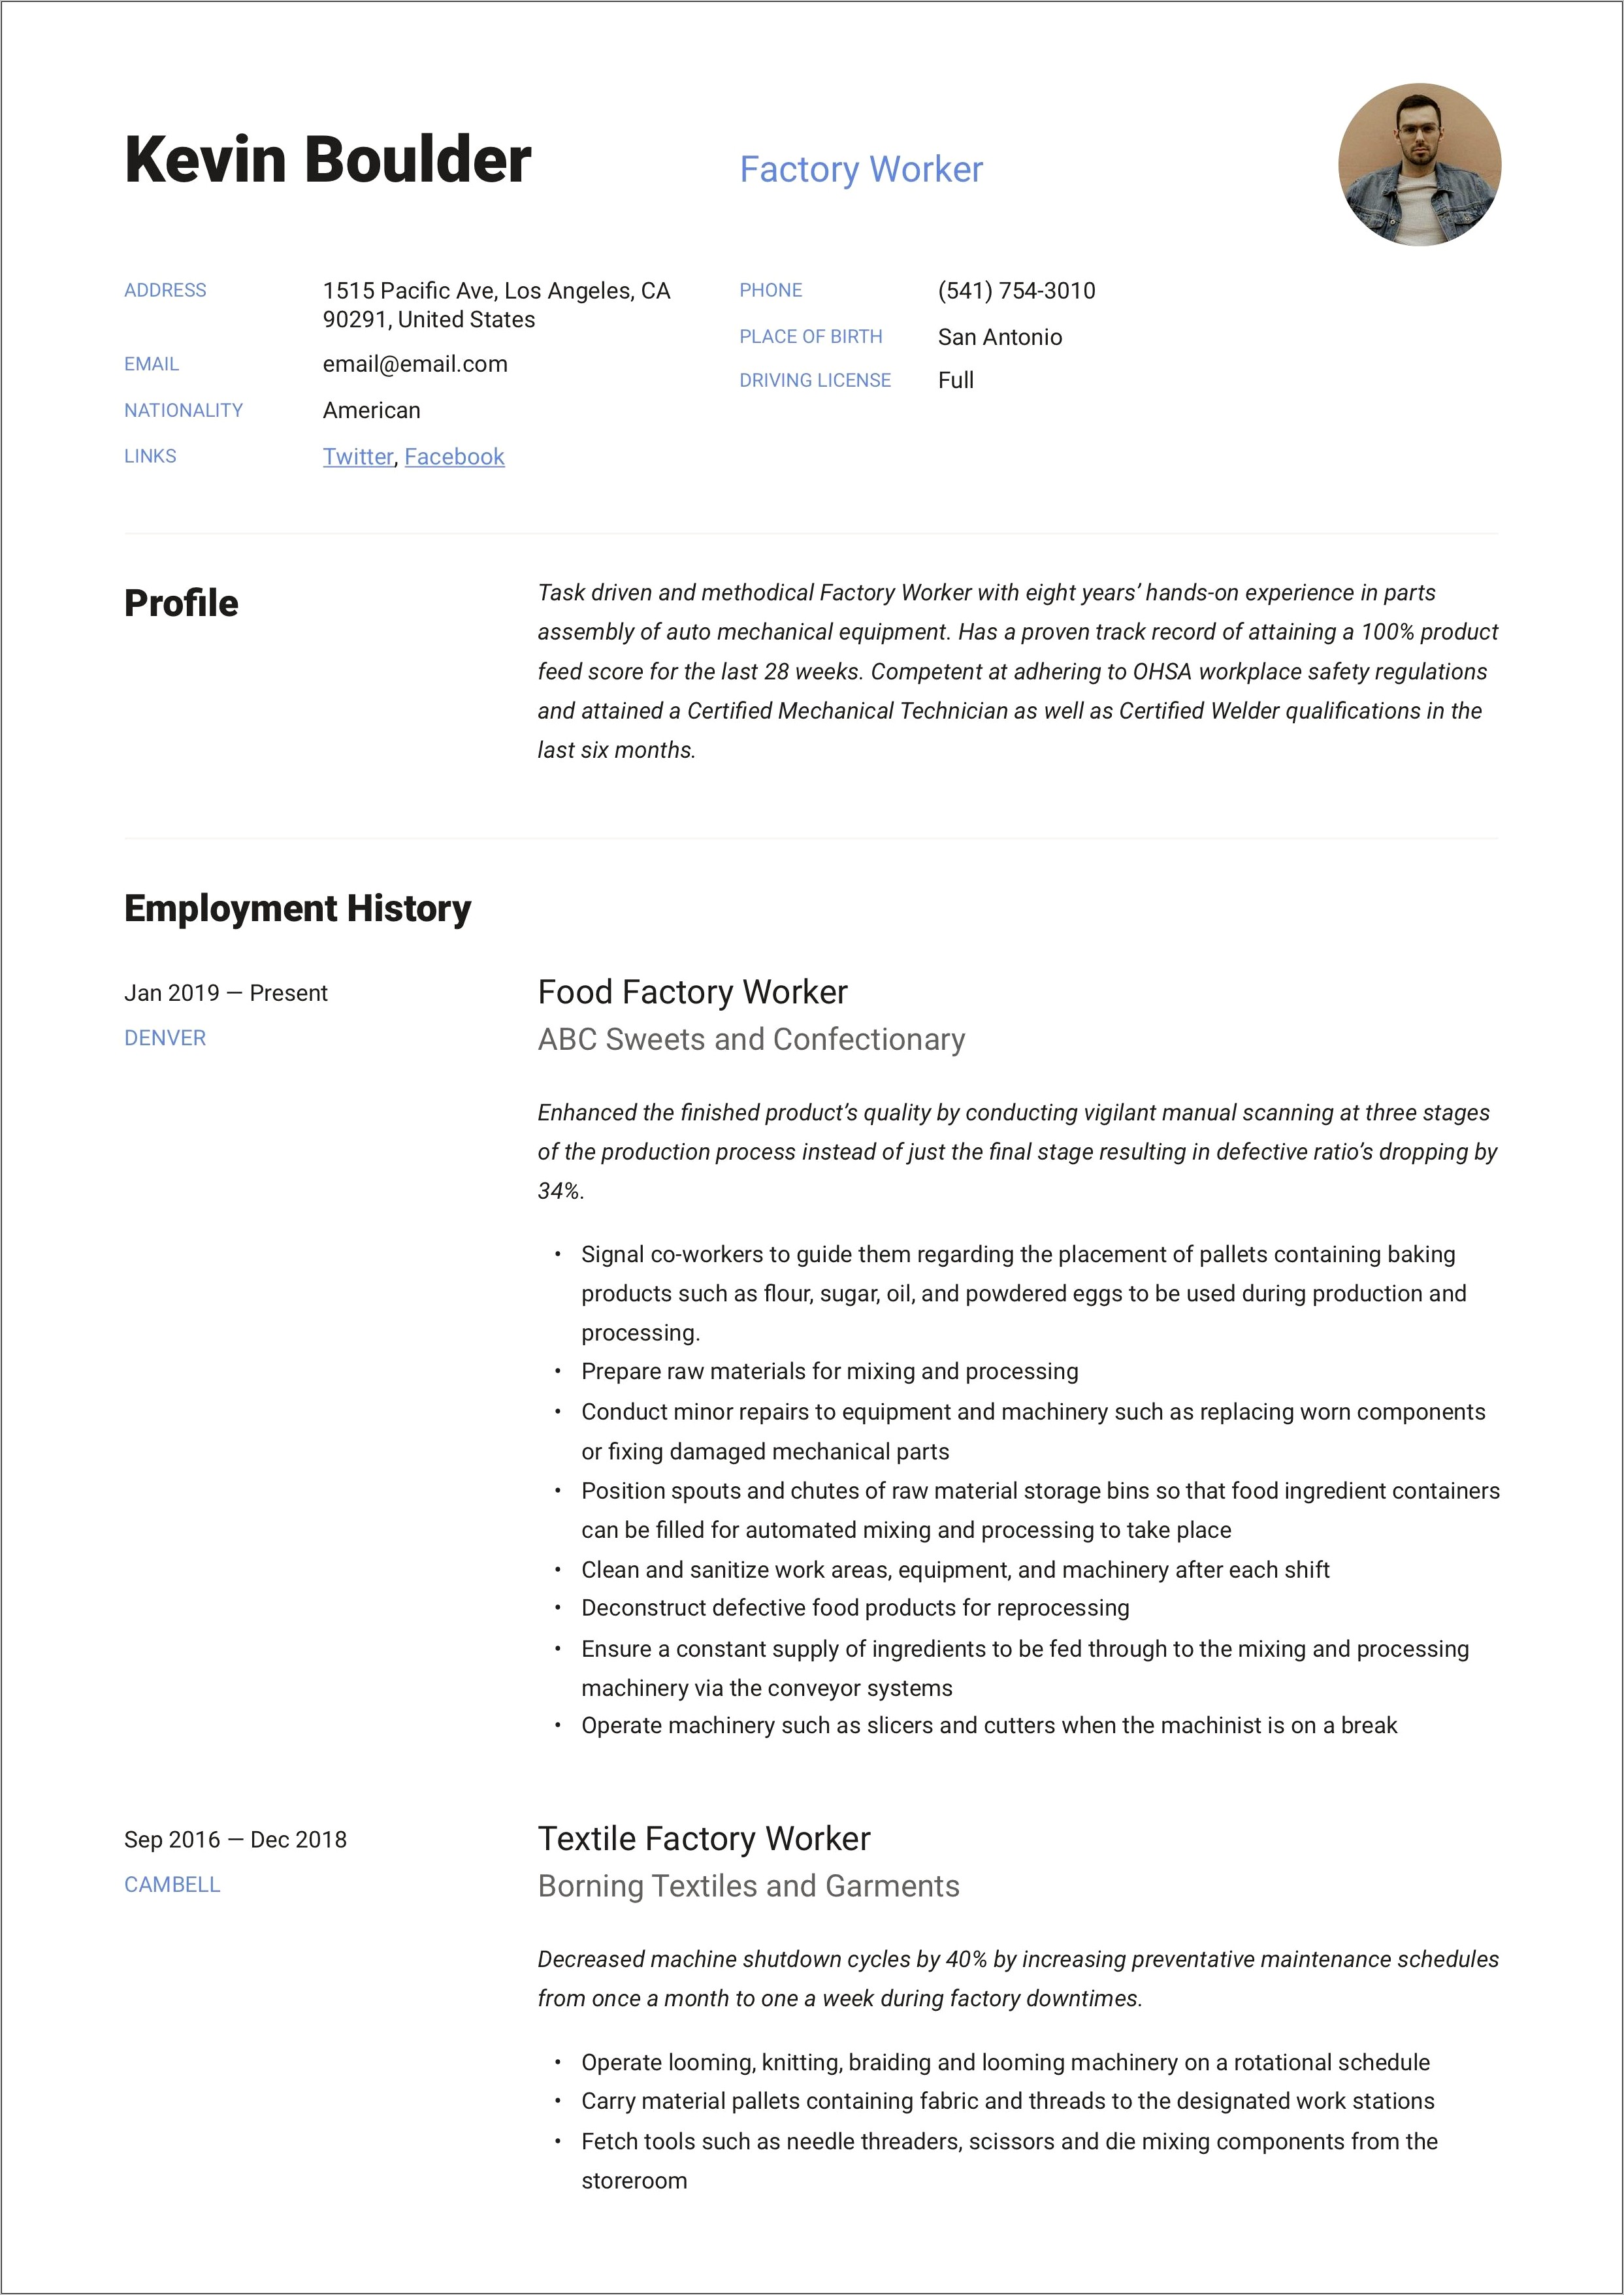 Sample Resume For Production Line Worker